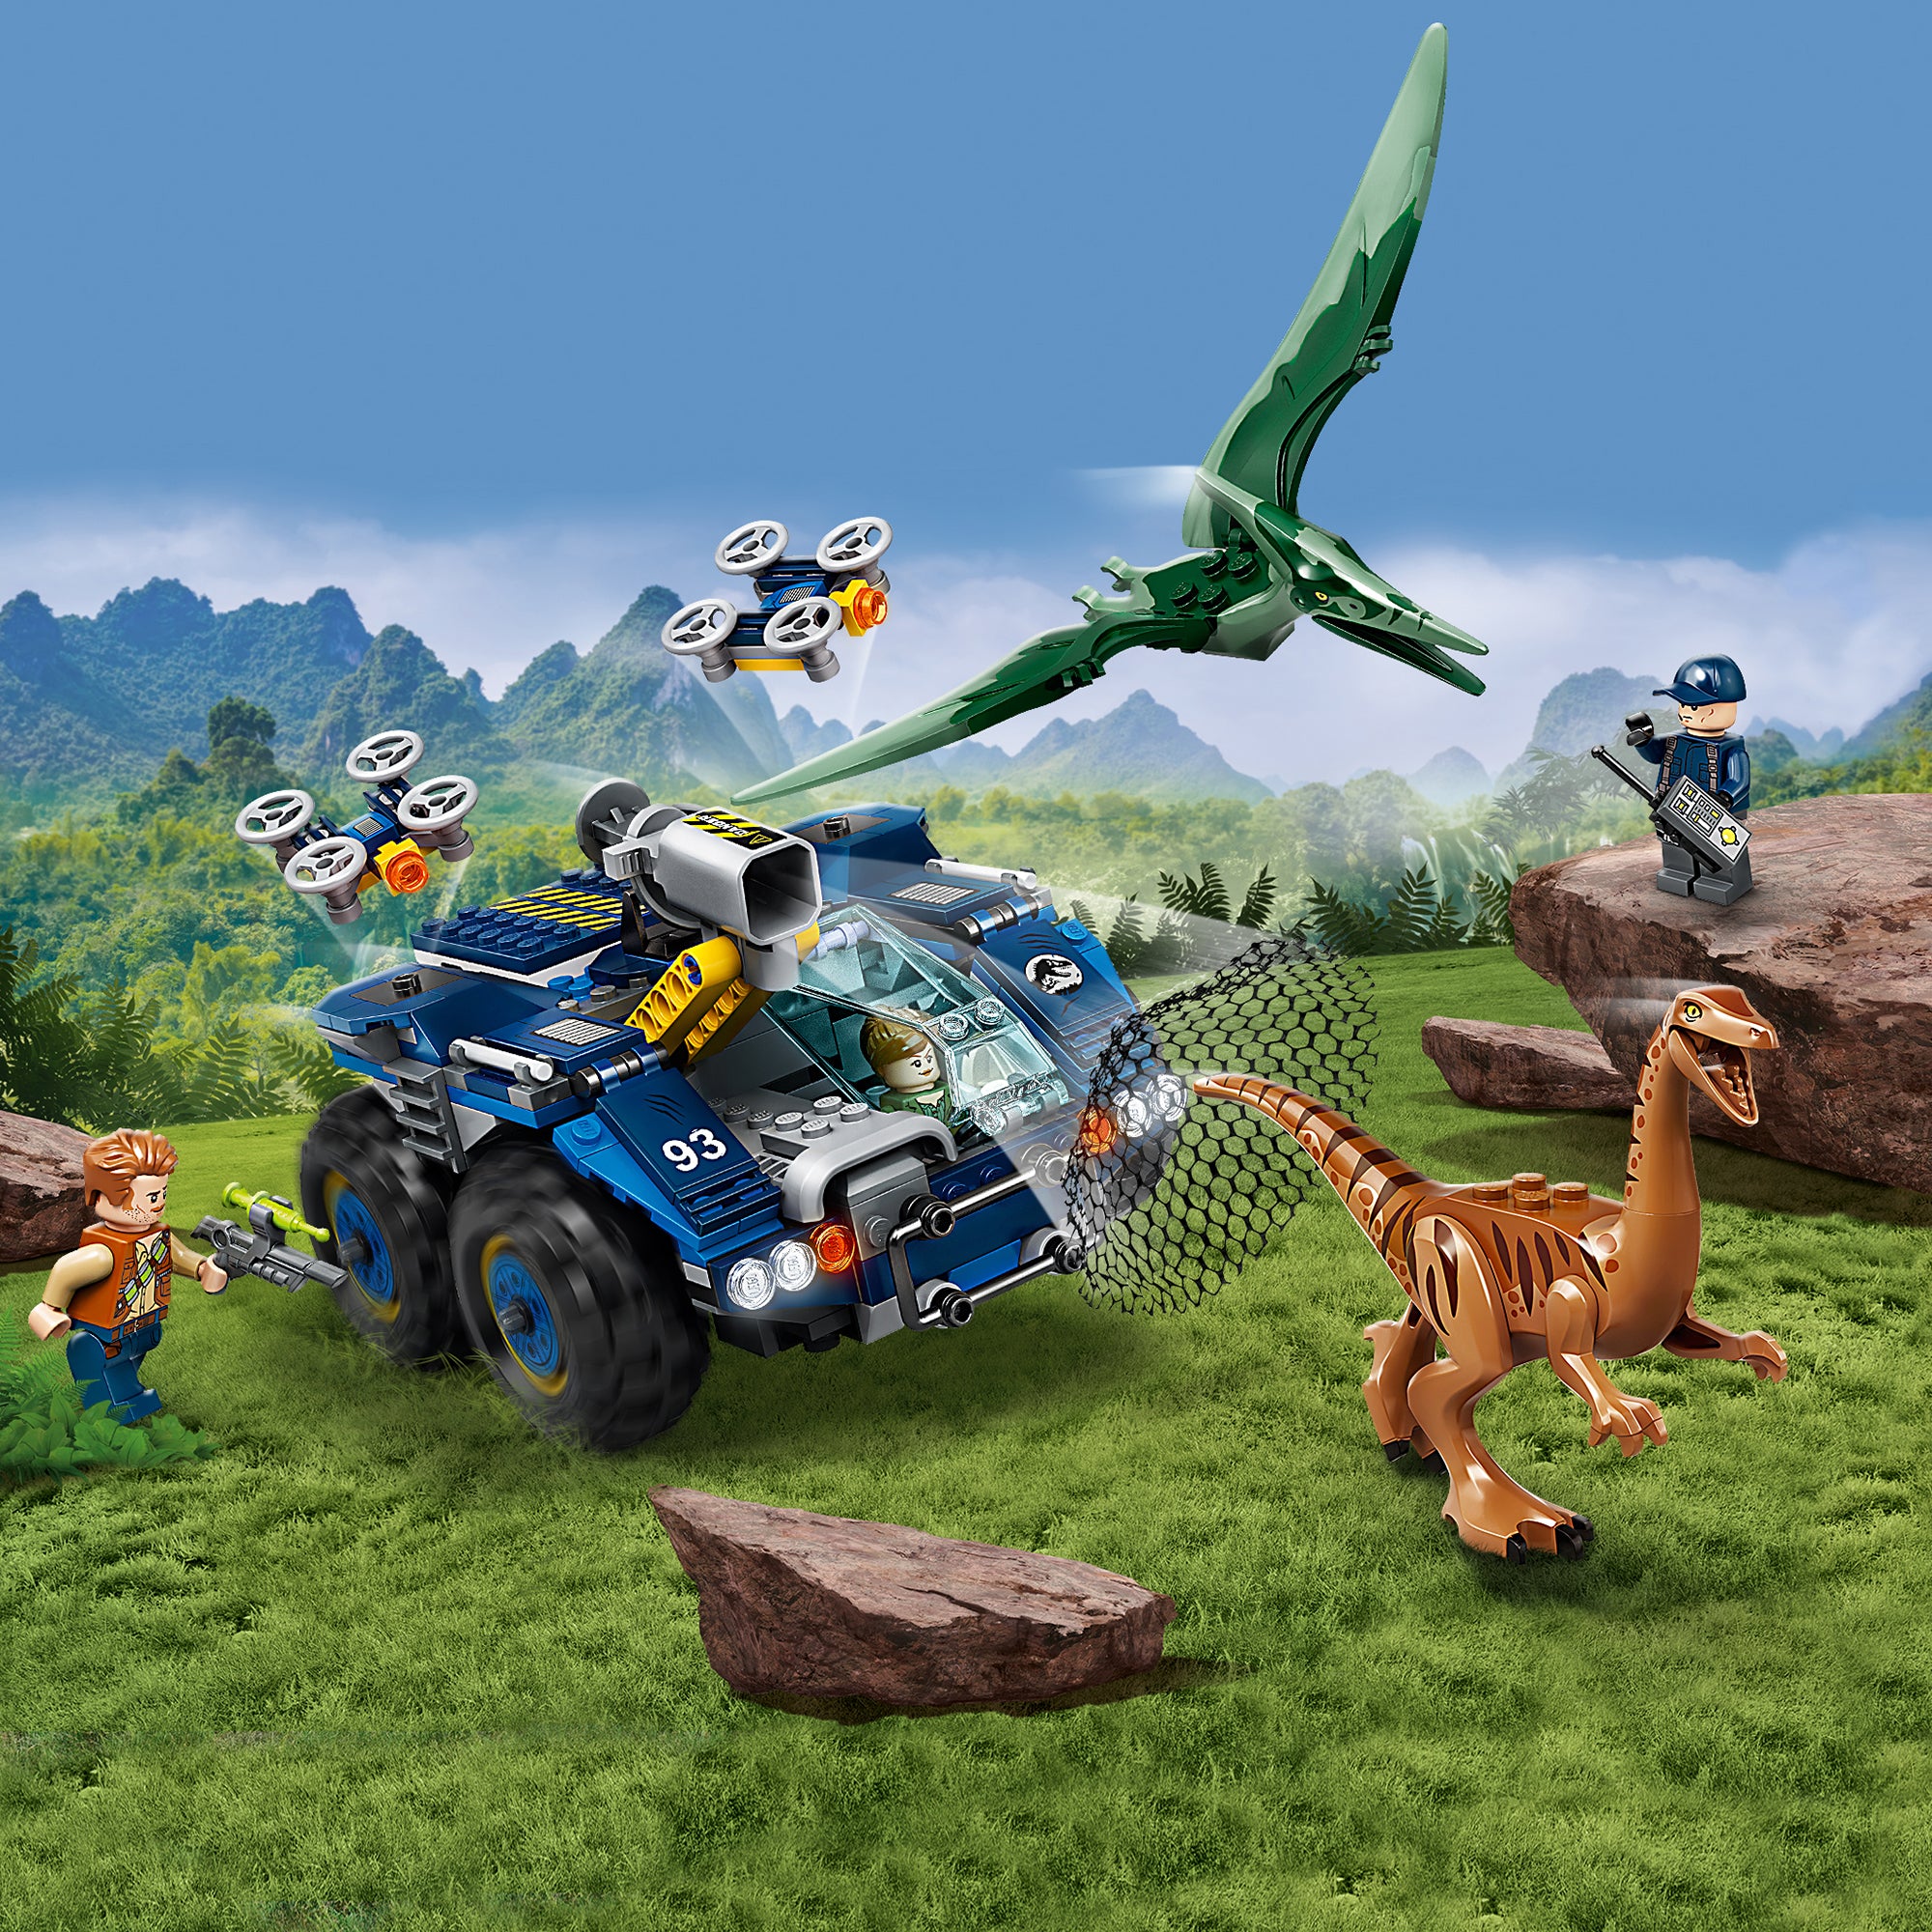 LEGO® Jurassic World Pteranodon Breakout Toy 75940 Default Title